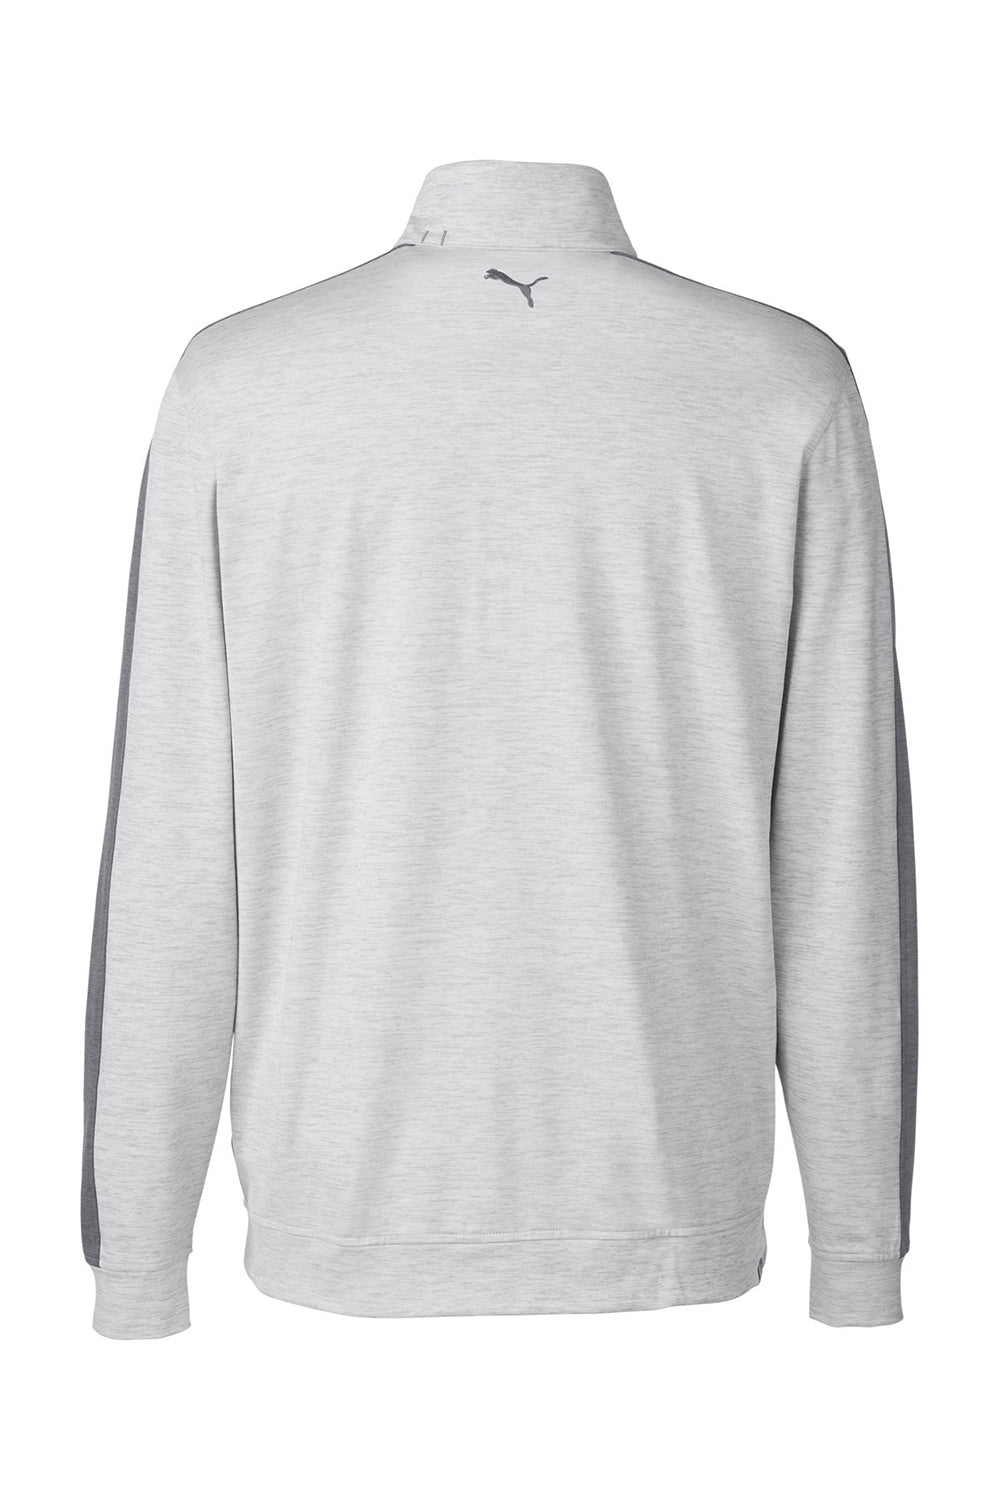 Puma 599129 Mens Cloudspun 1/4 Zip Sweatshirt Heather High Rise Grey/Quiet Shade Grey Flat Back